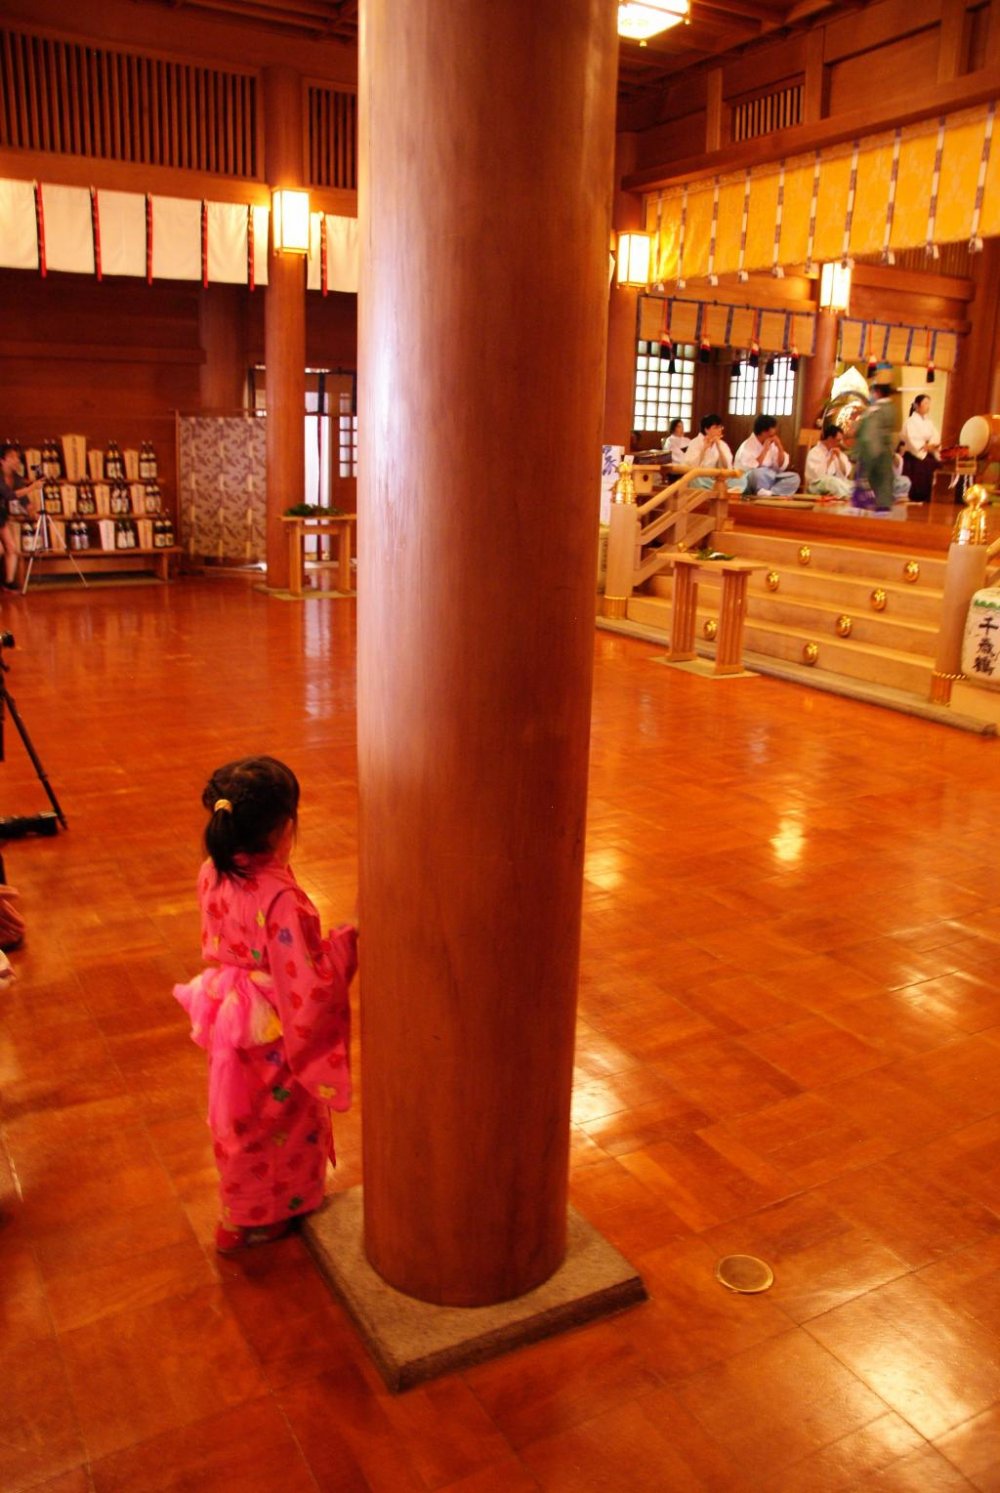 Intently watching the proceedings at Hokkaido Shrine